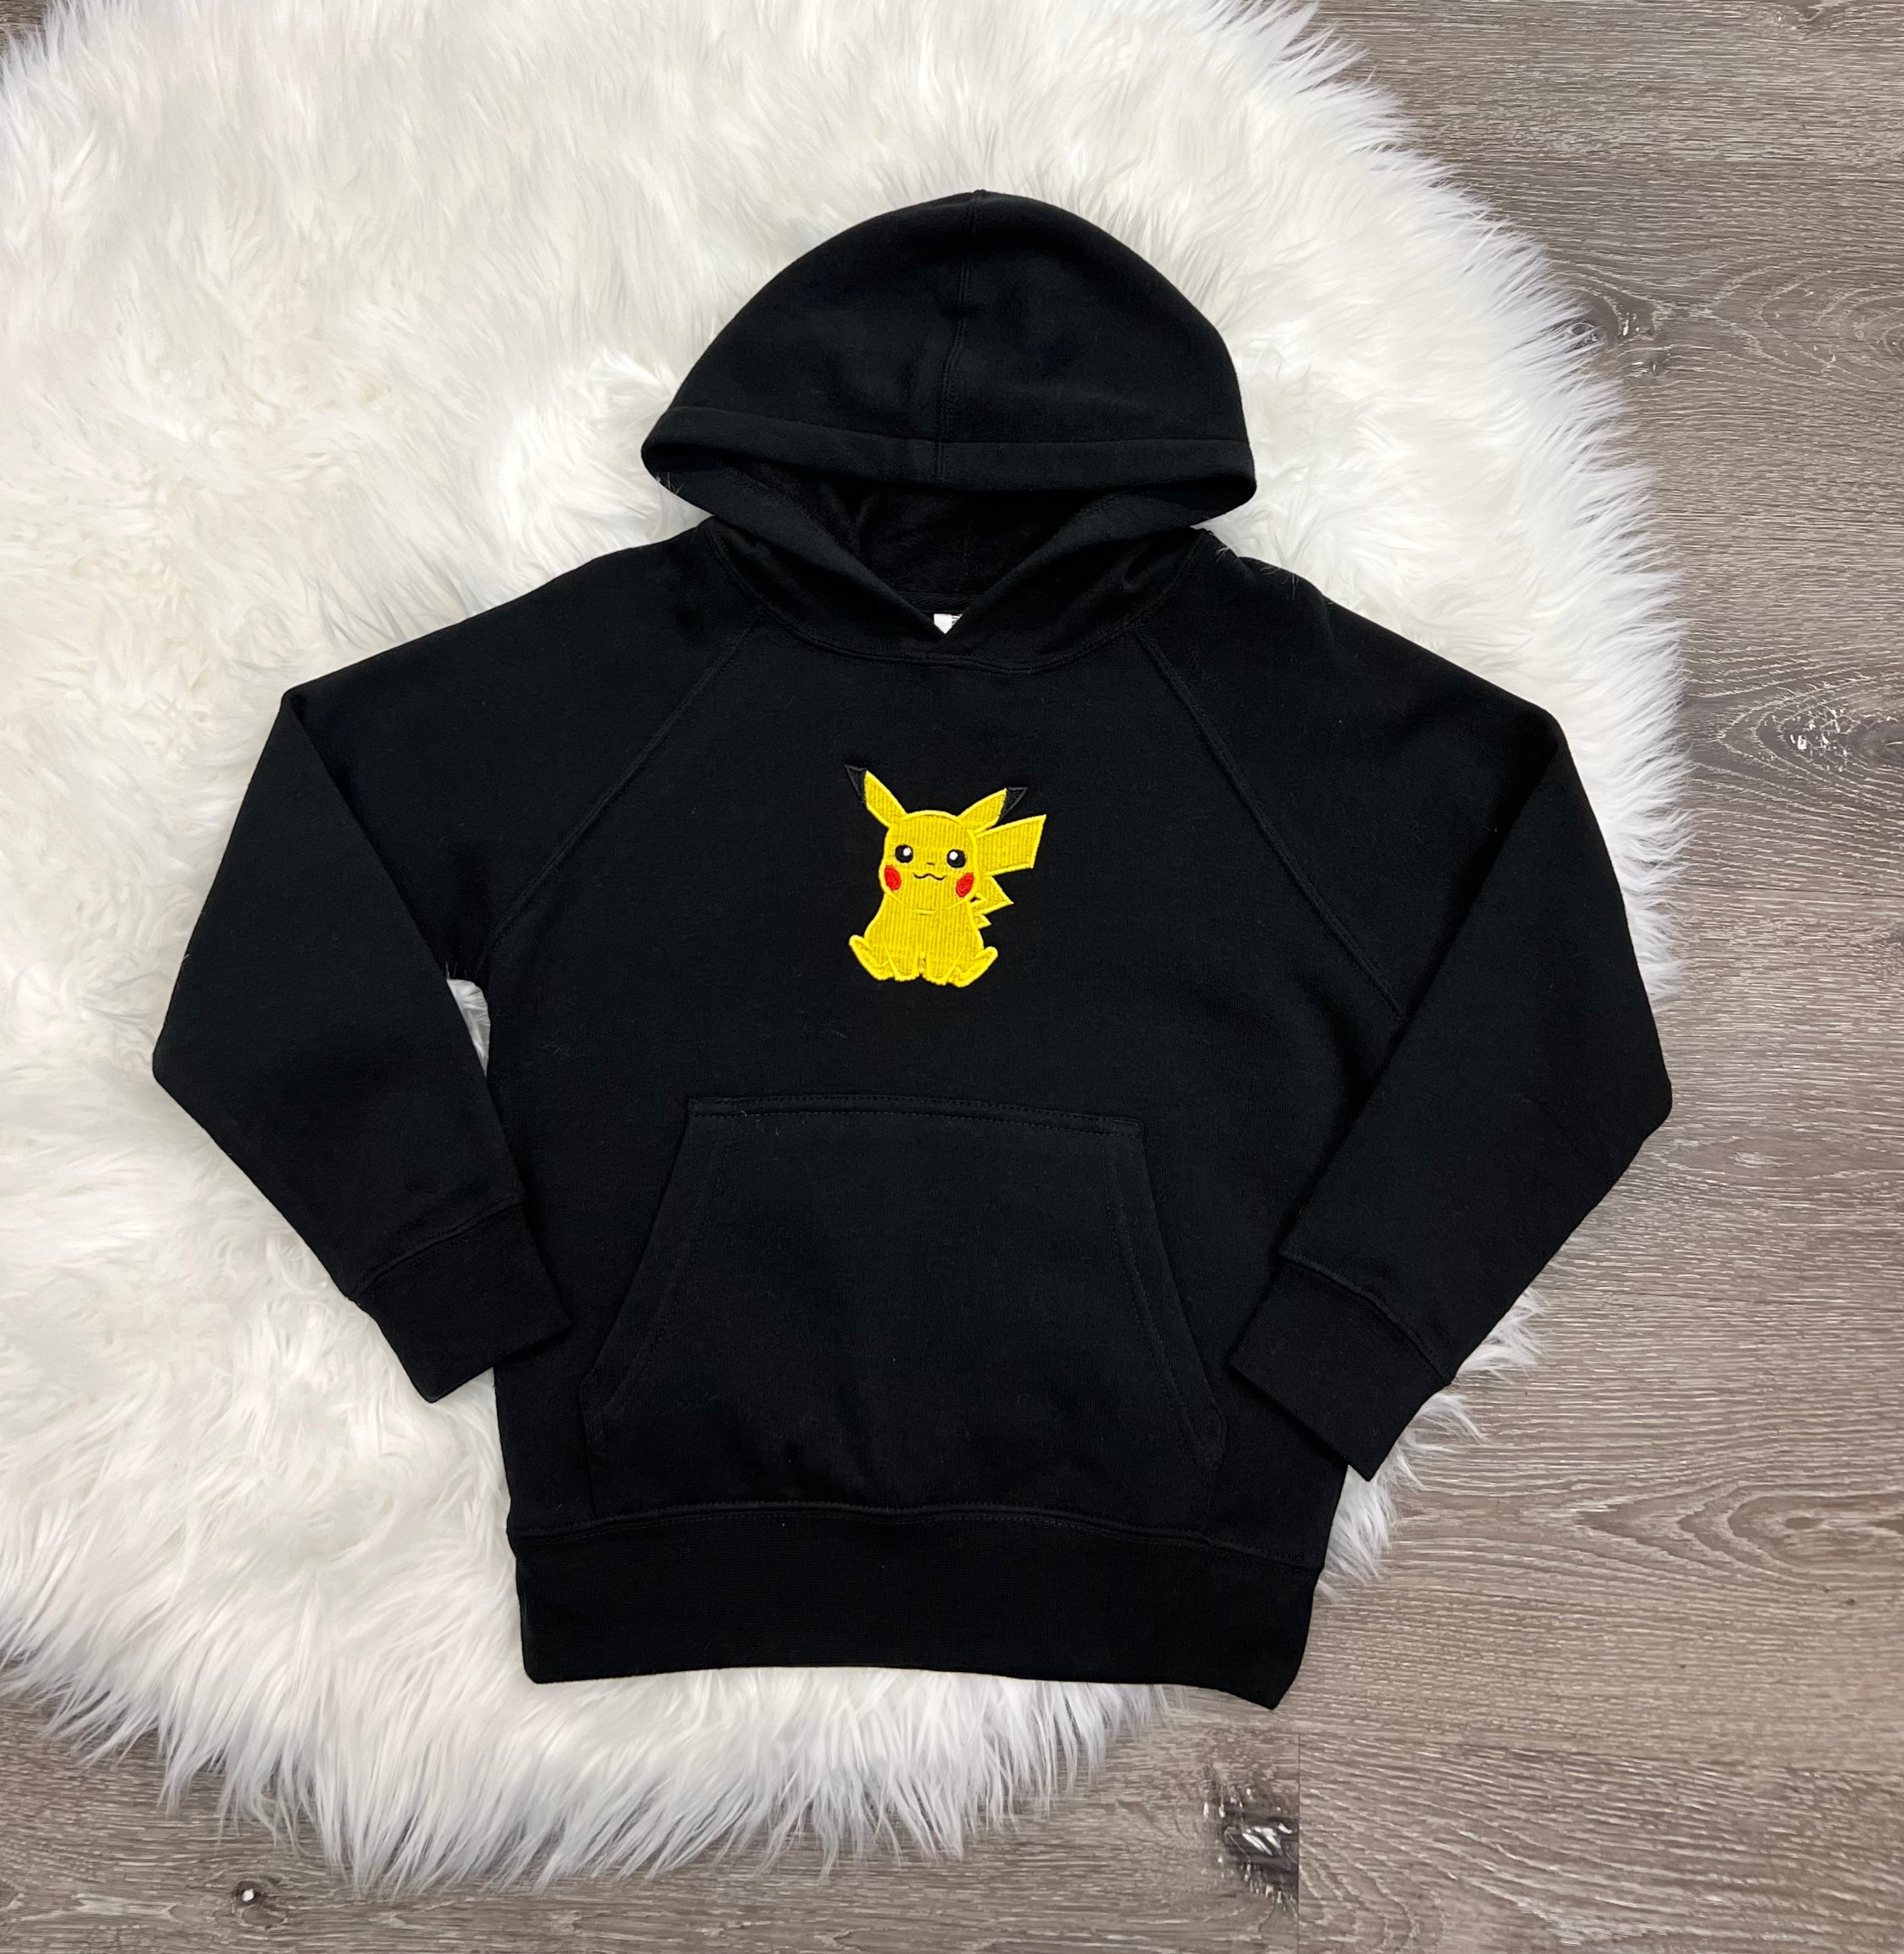 Embroidered Pikachu Hoodie